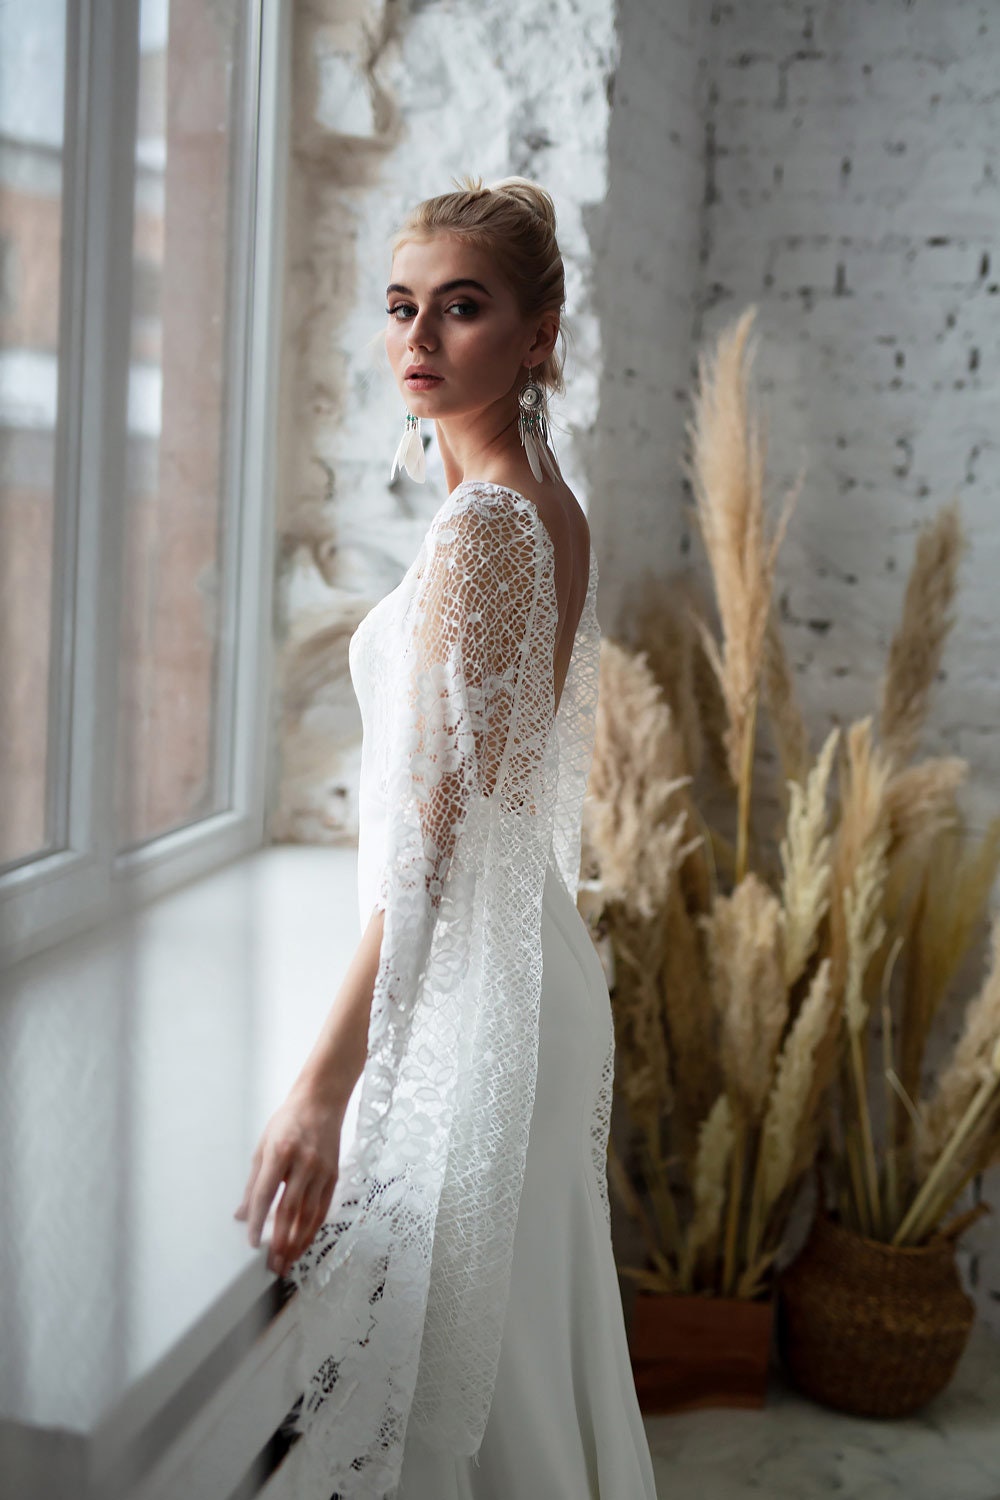 Cape sleeve wedding dress Lace Wedding Dress Caftan | Etsy